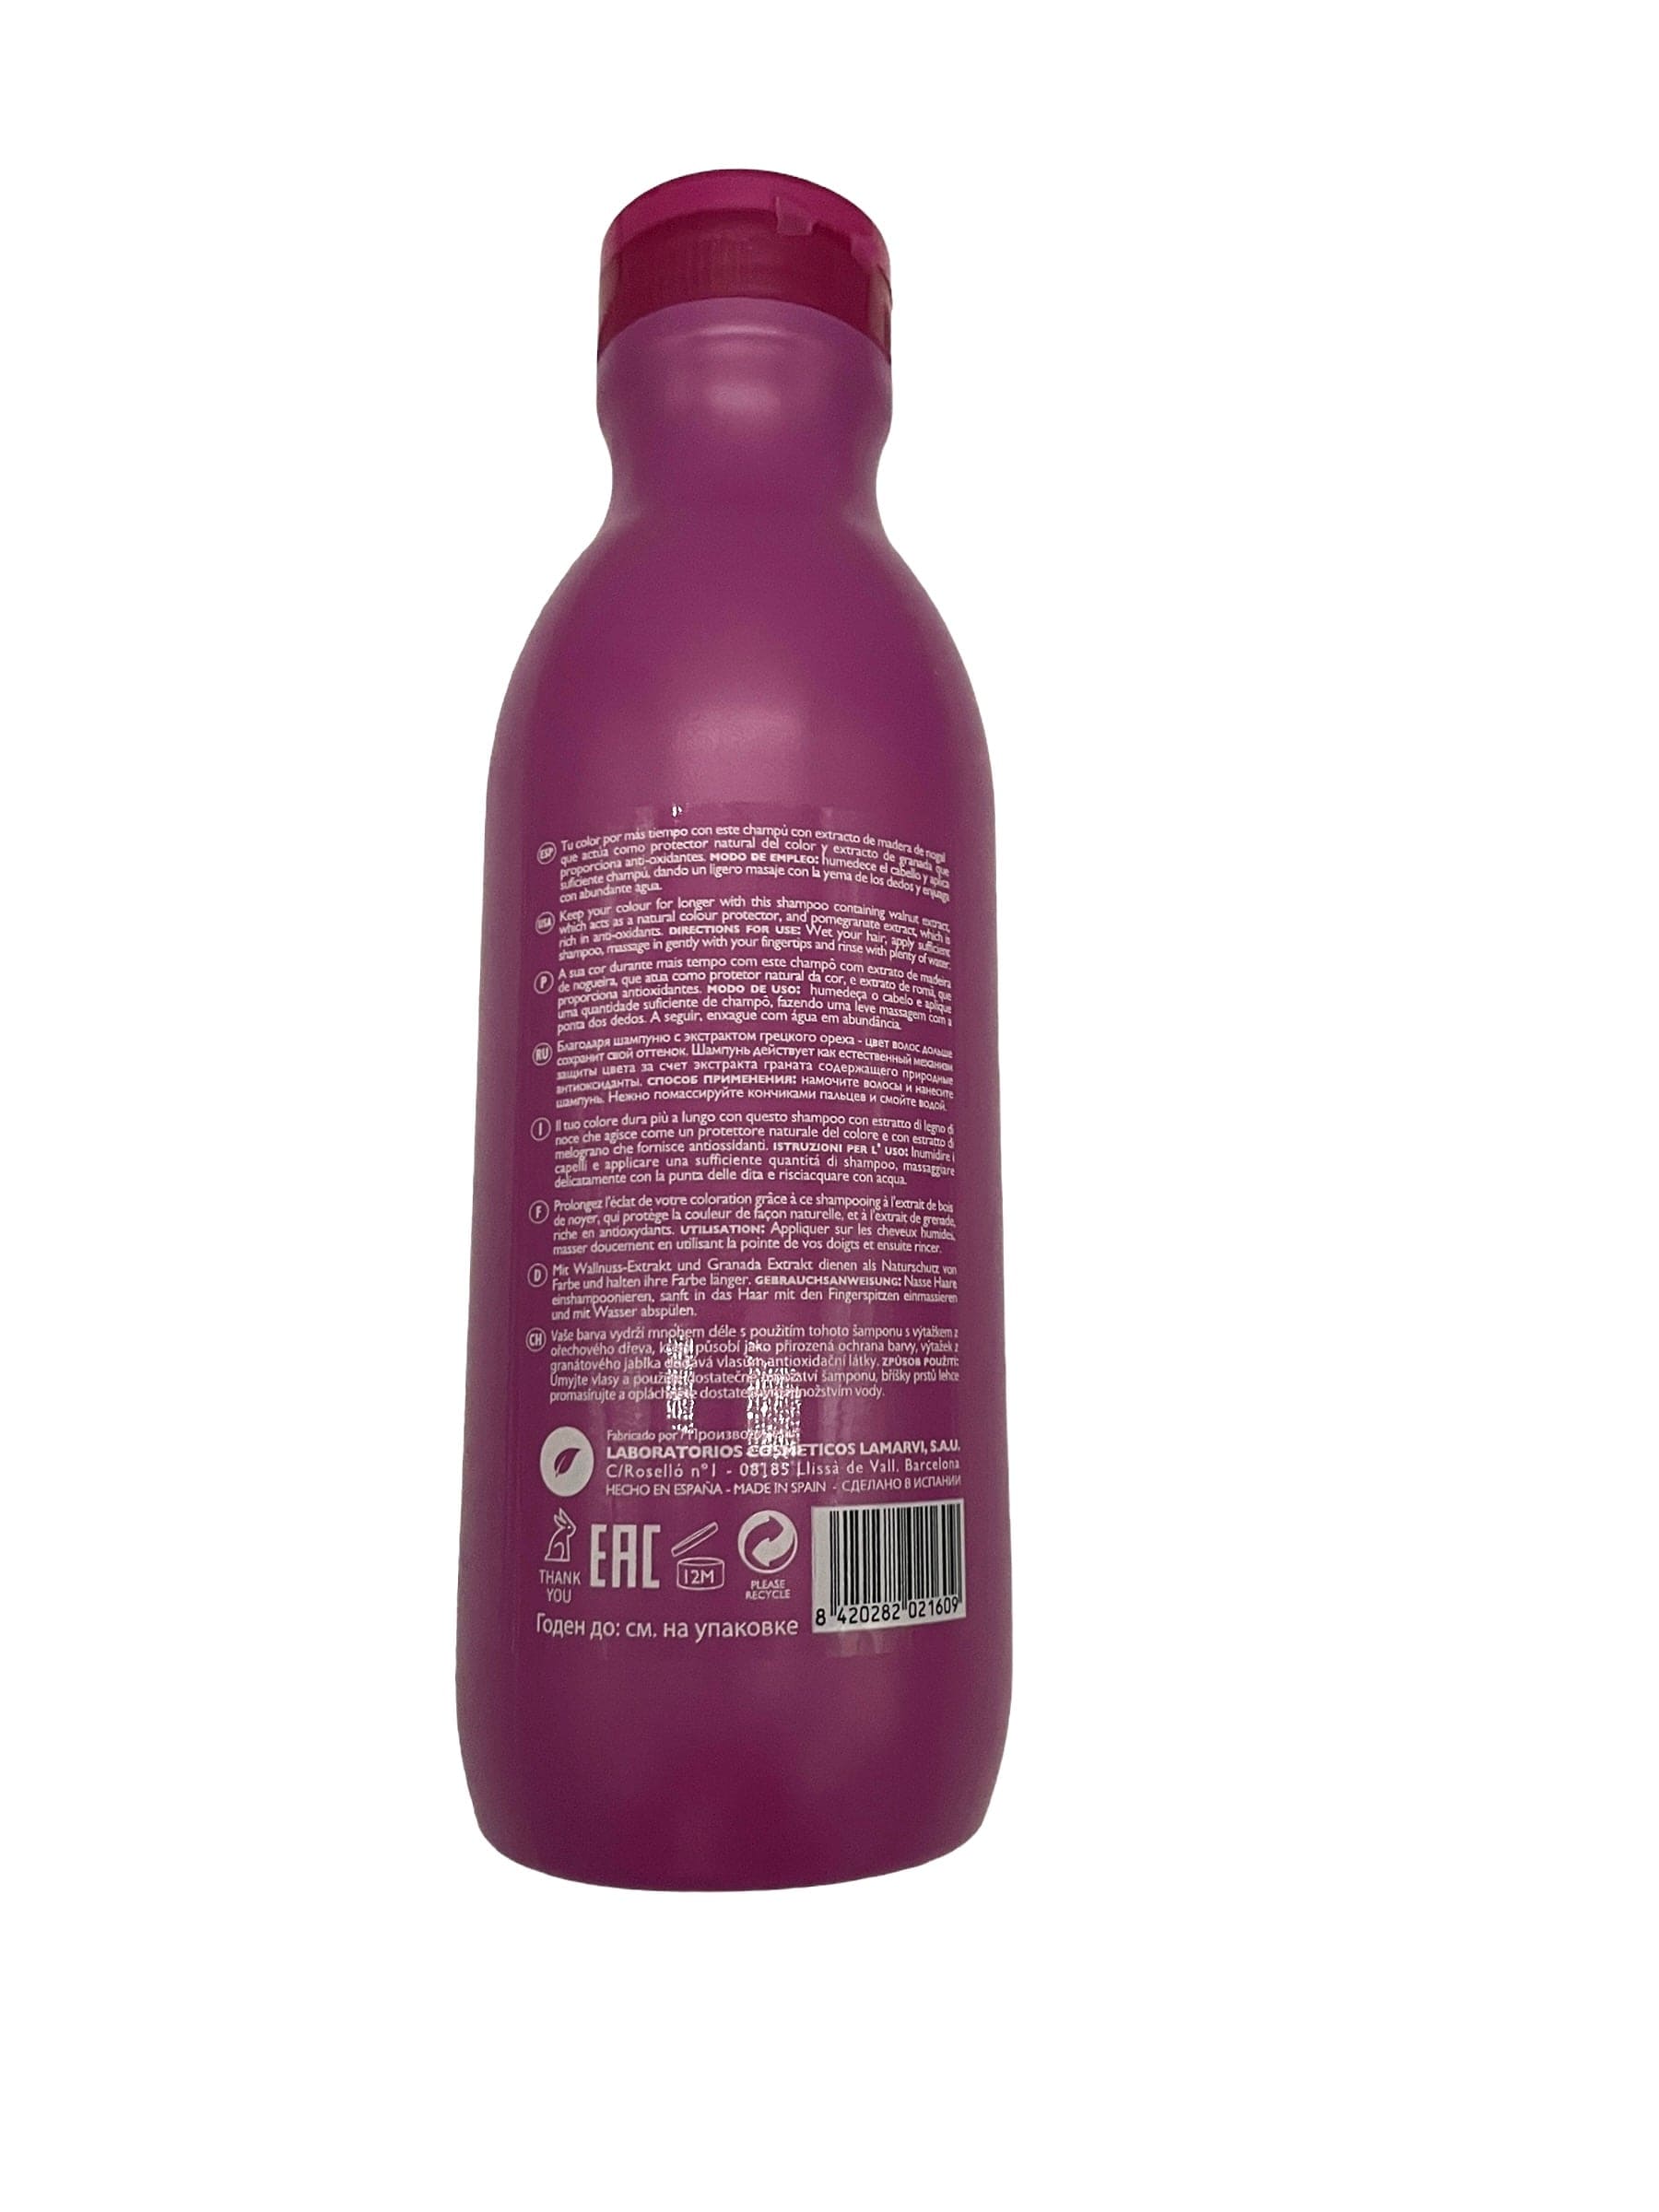 Hair Shampoo Alea For Colored Hair With Pomegranate Extract 18.3 oz Hair Shampoo